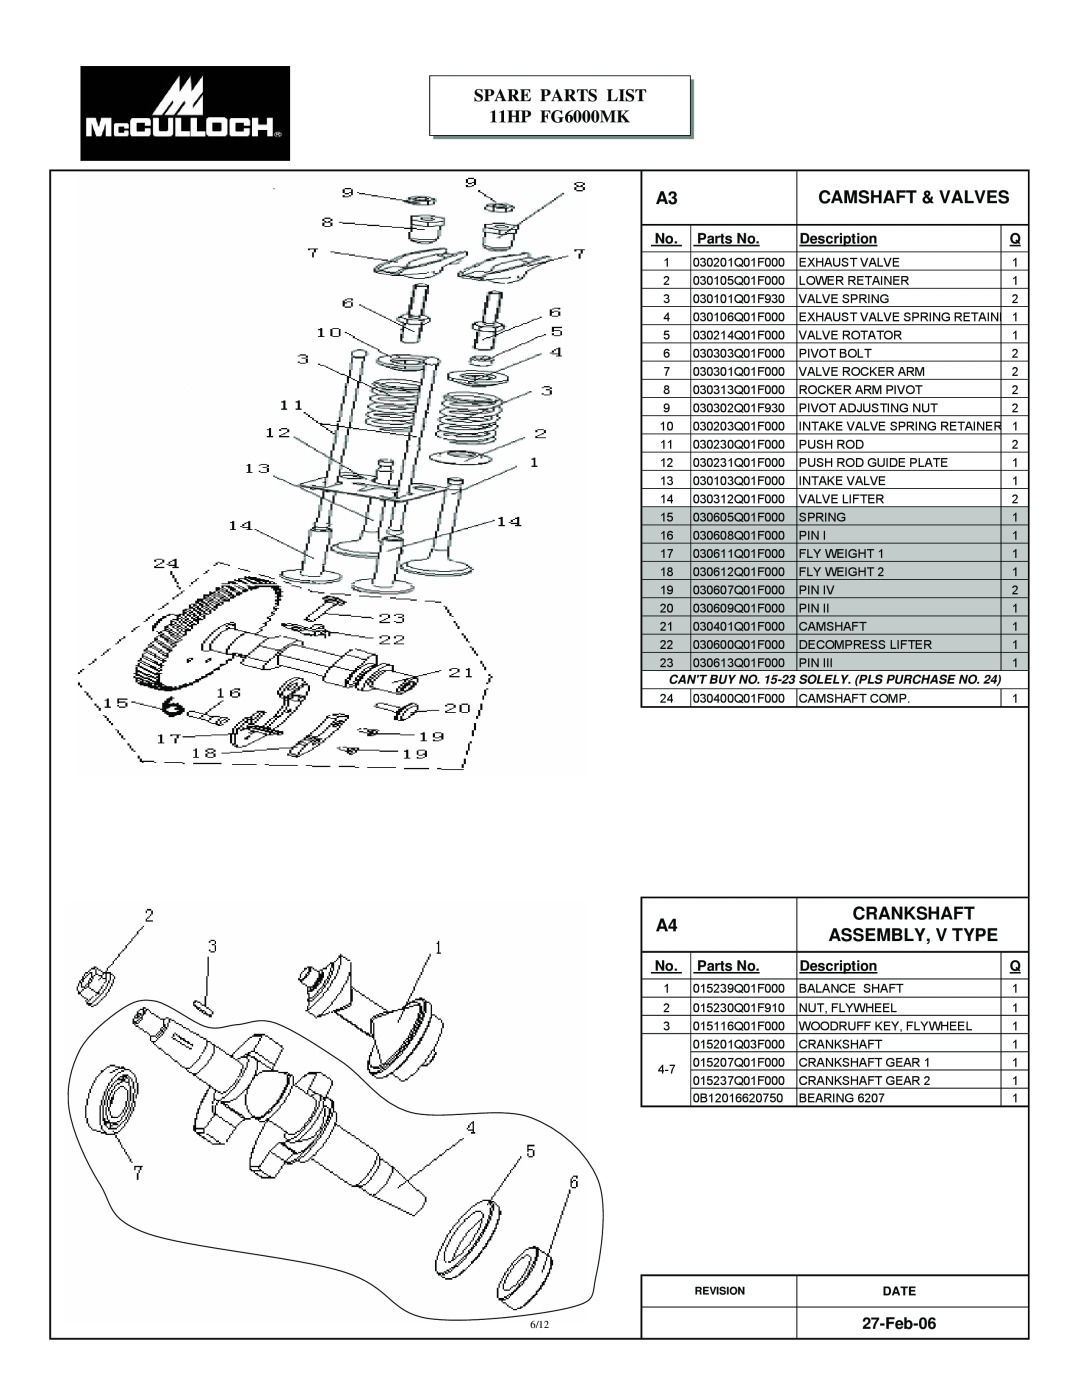 McCulloch FG6000MKUD-C Camshaft & Valves, Crankshaft, Assembly, V Type, SPARE PARTS LIST 11HP FG6000MK, Feb-06, Parts No 